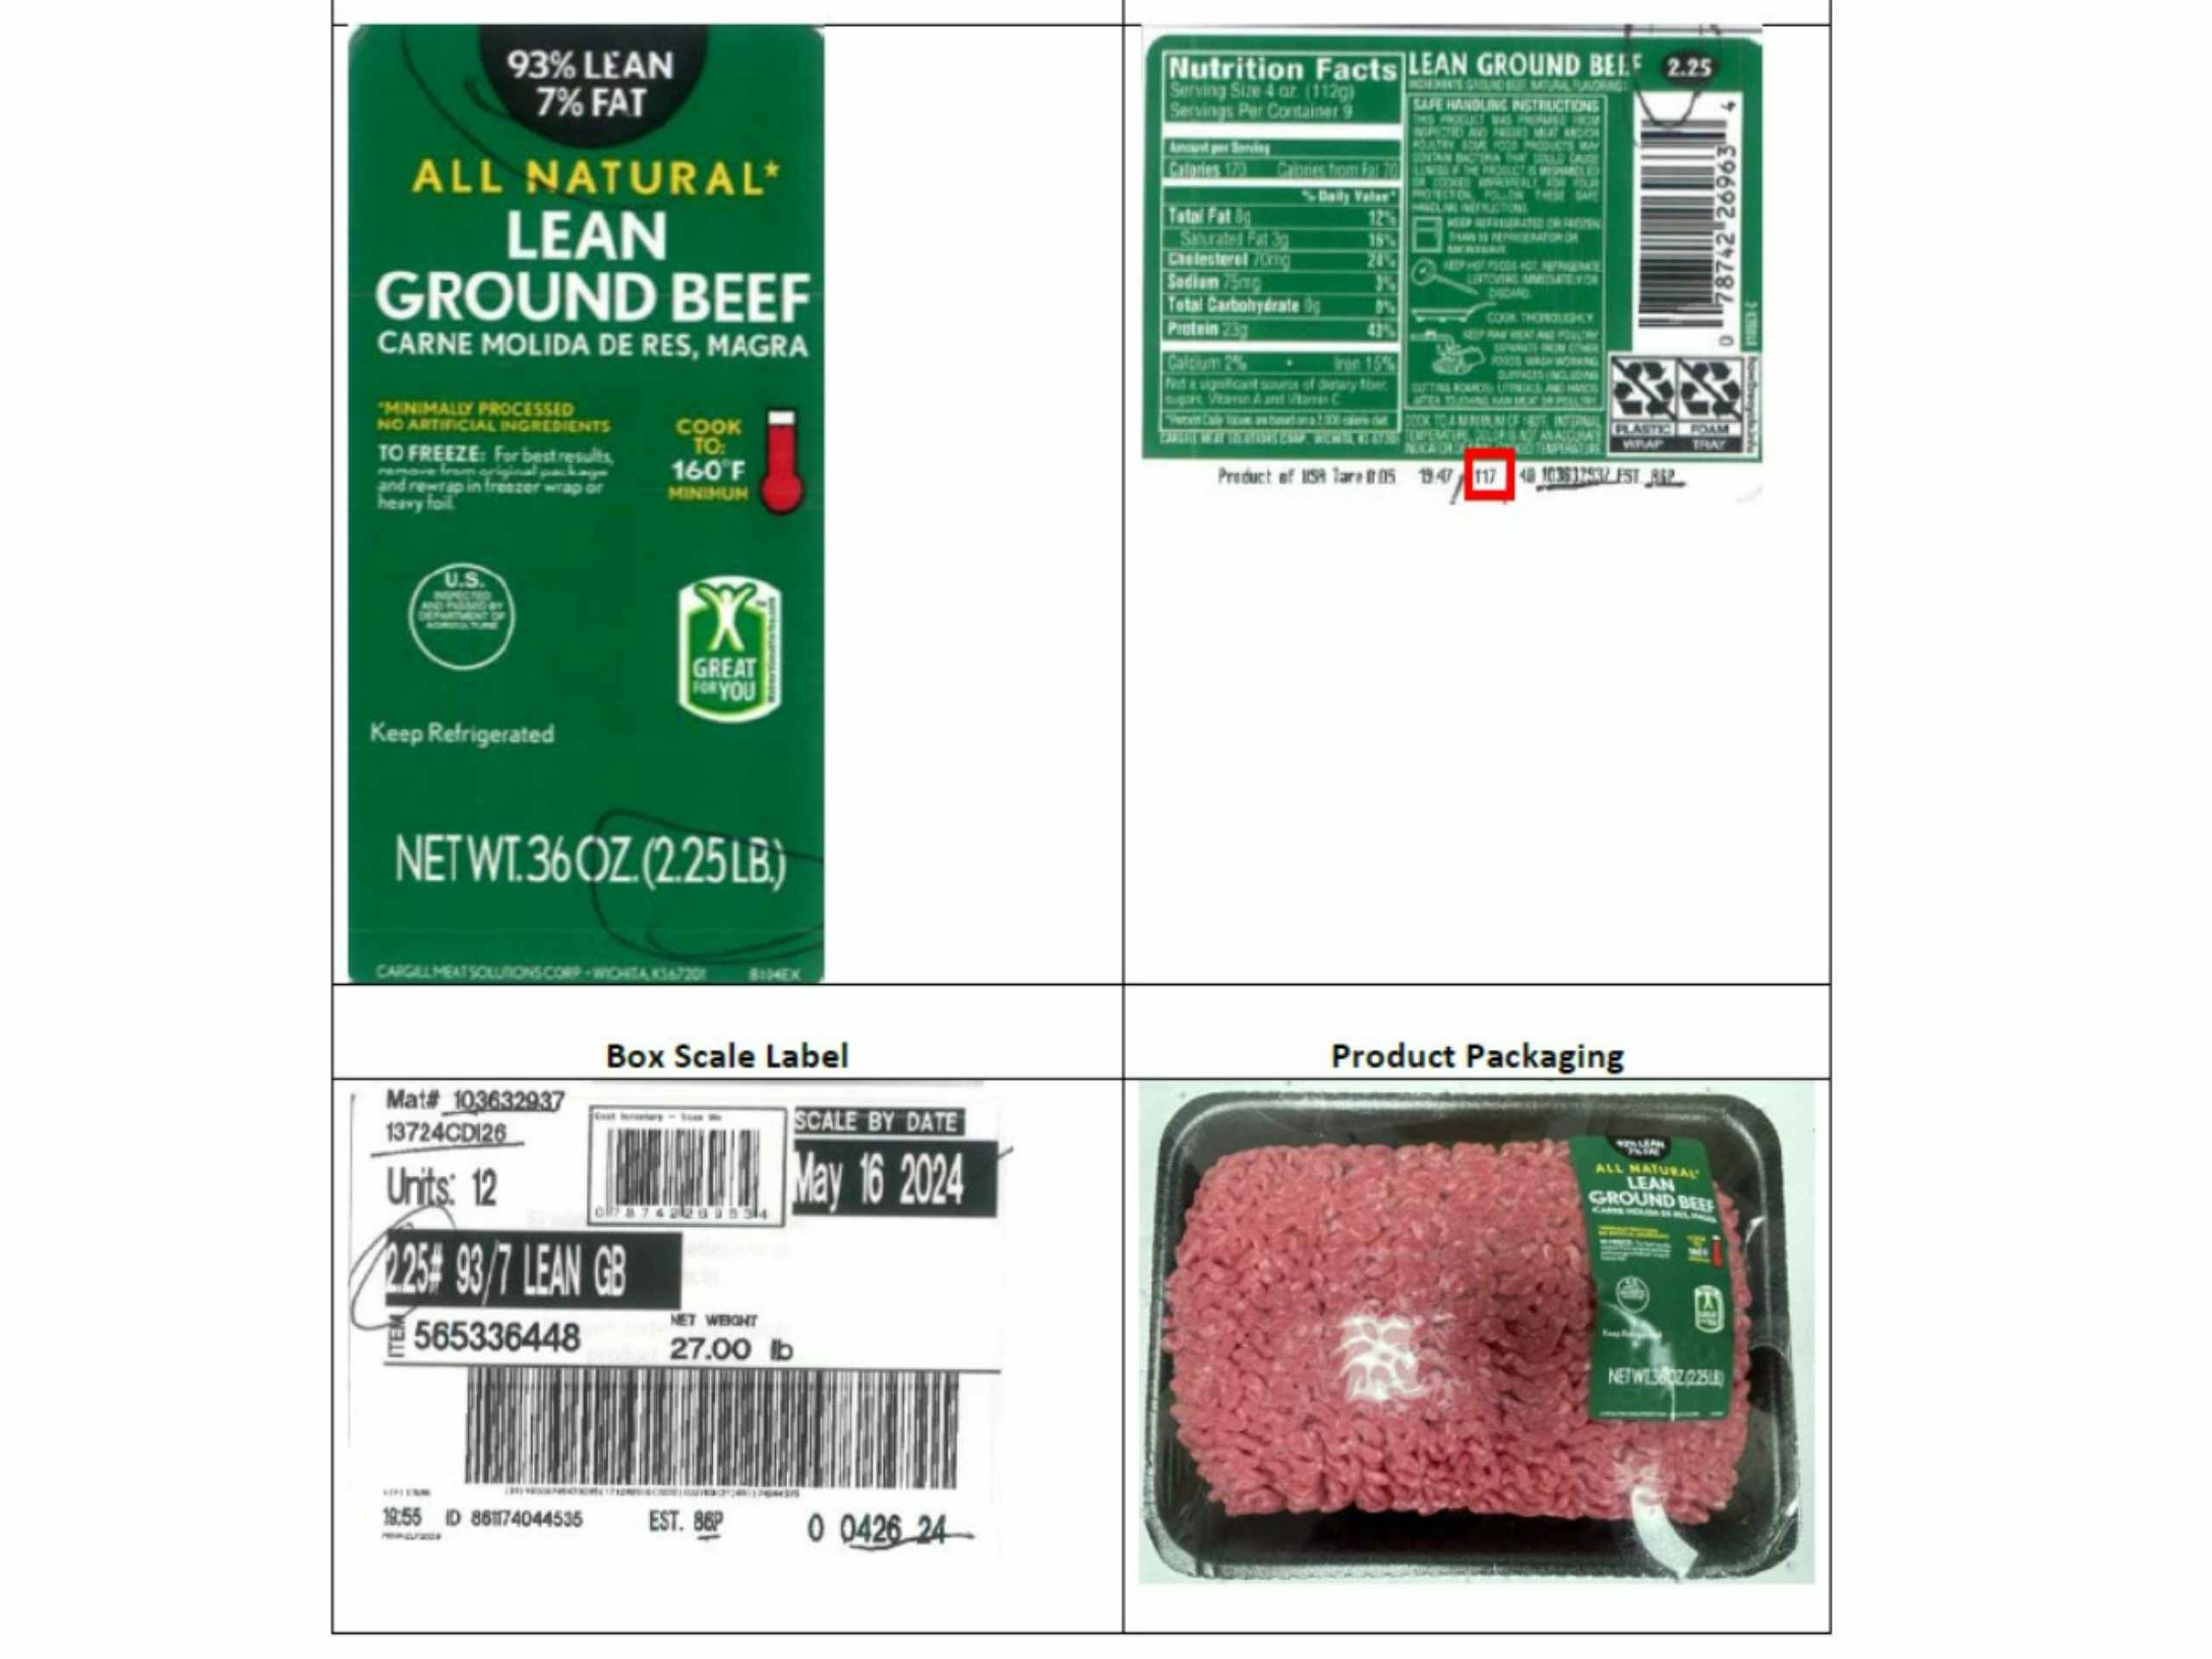 recalls cargill lean ground beef label